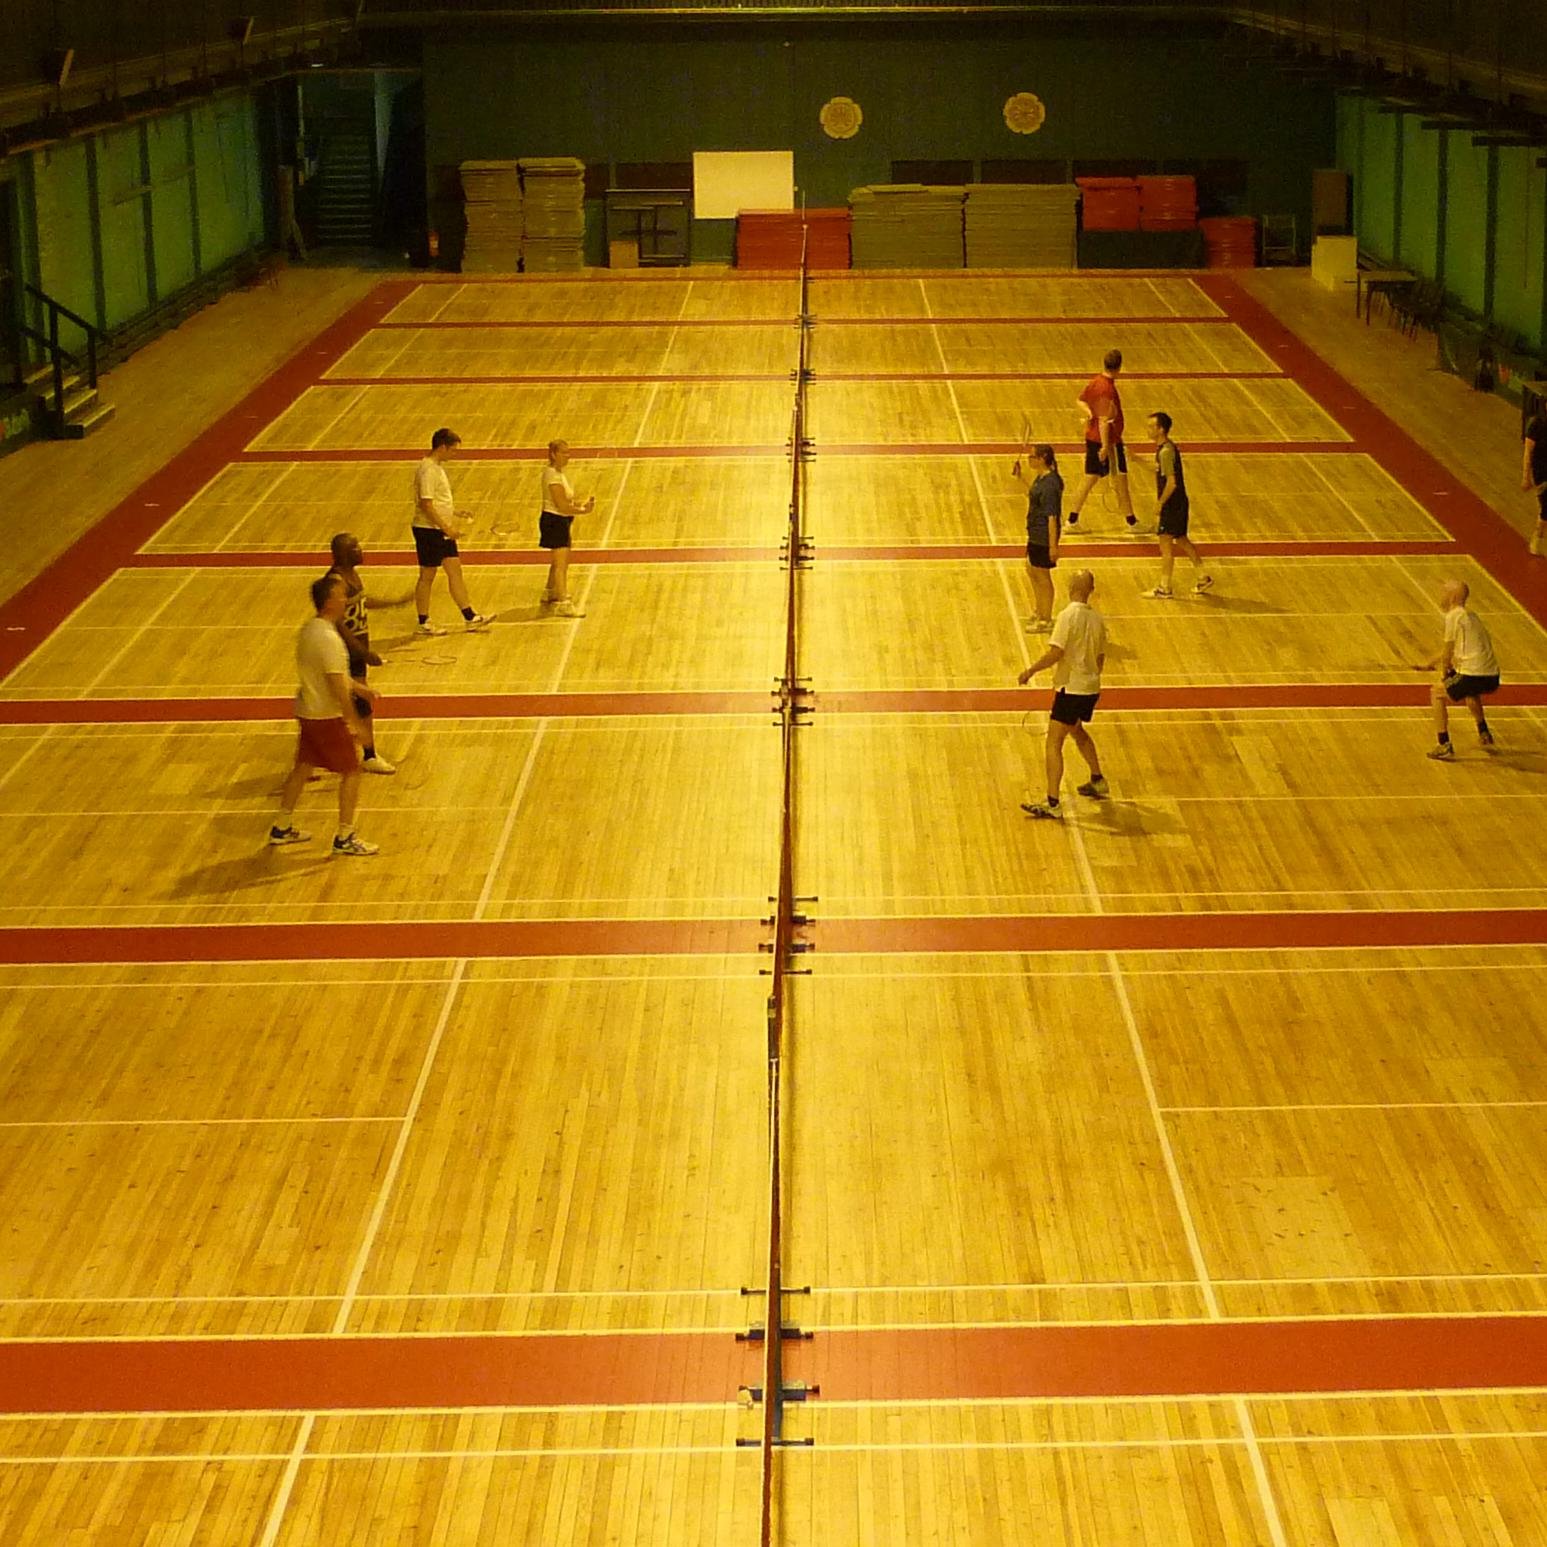 Badminton Club in York, UK.